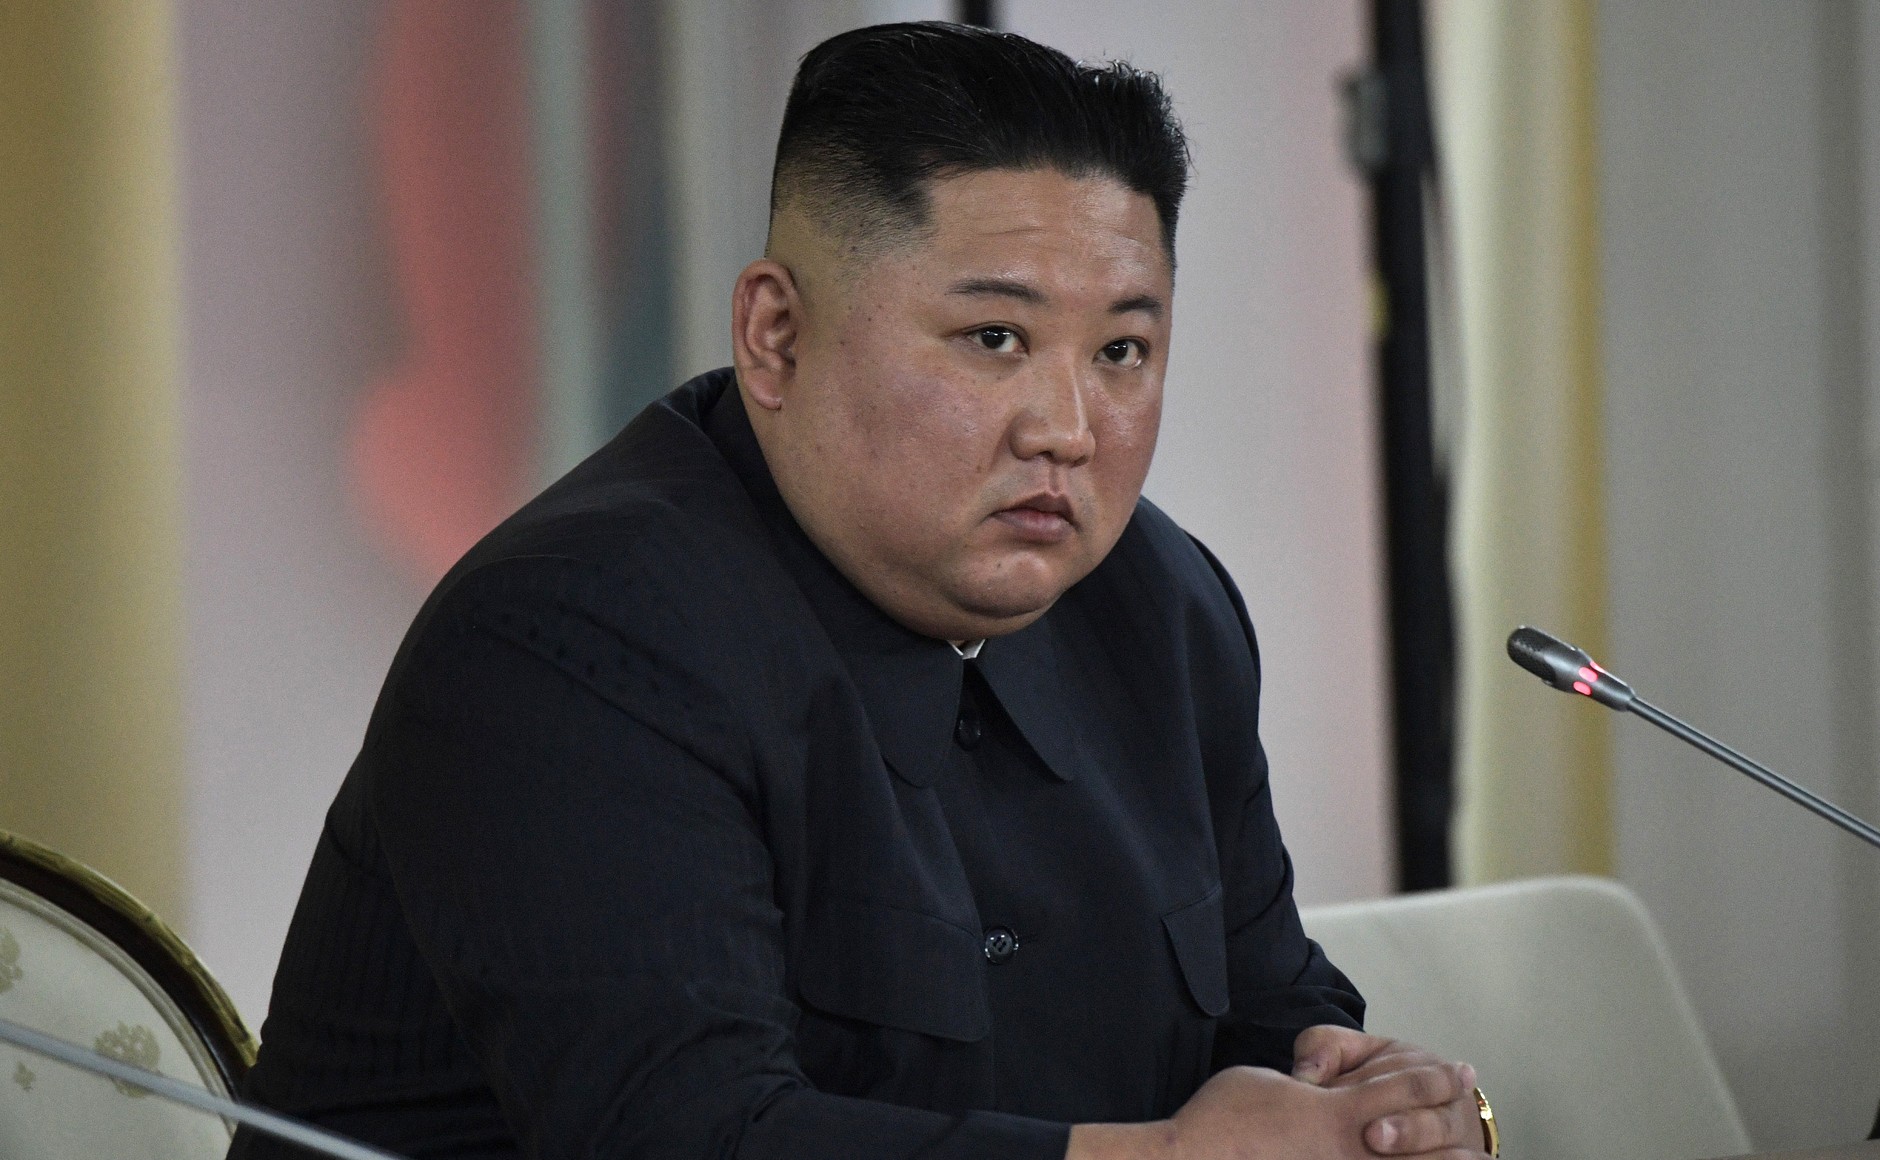 Visita de Kim Jong-un à Rússia revela “importância estratégica” de laços